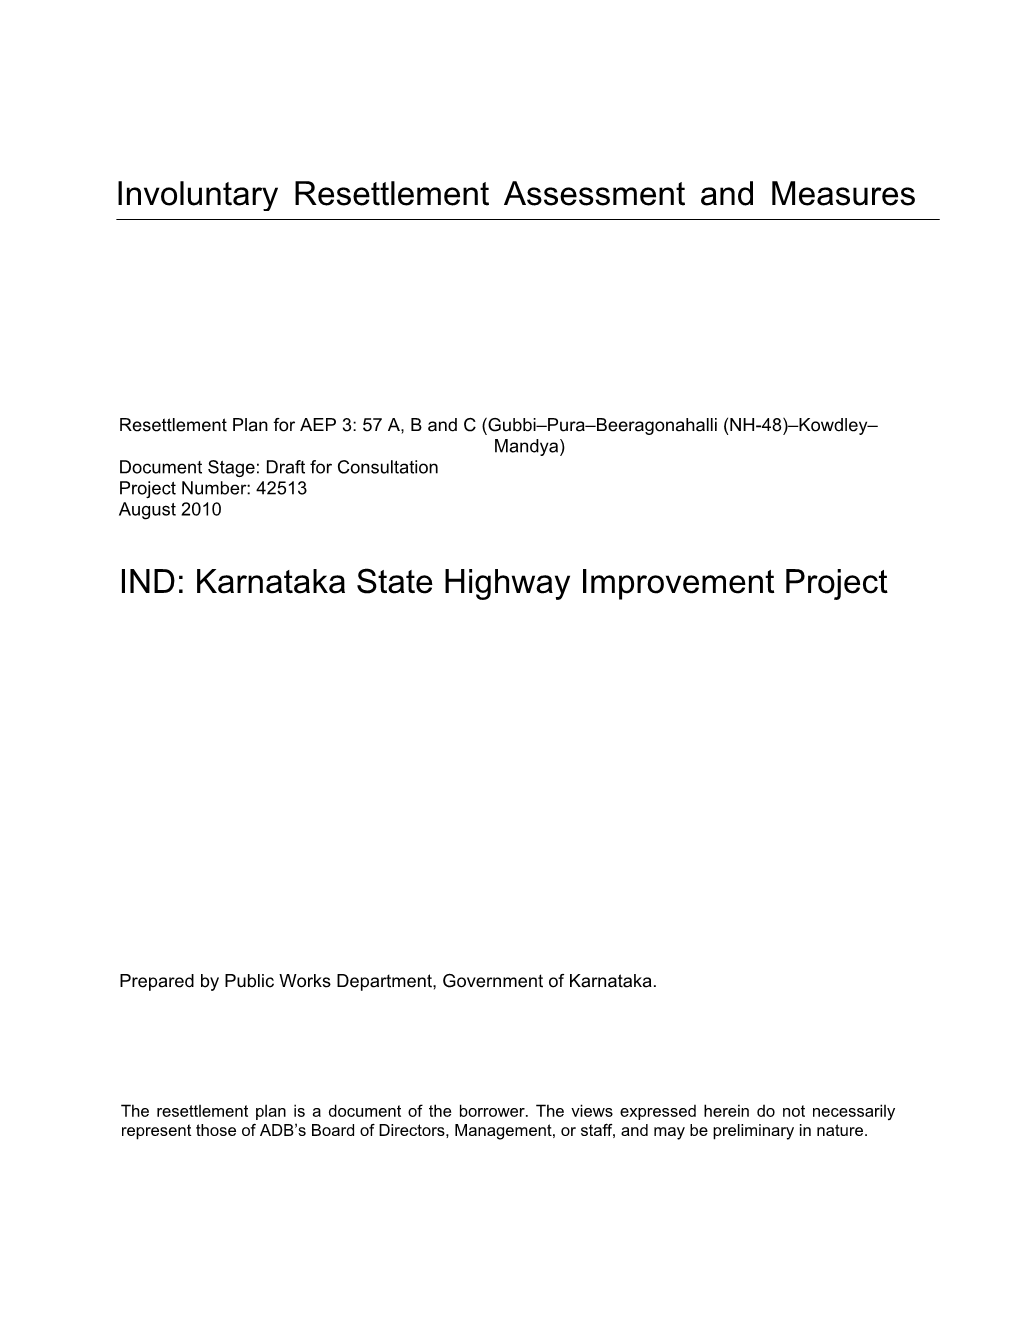 Kowdley–Mandya, Karnataka State Highway Improvement Project